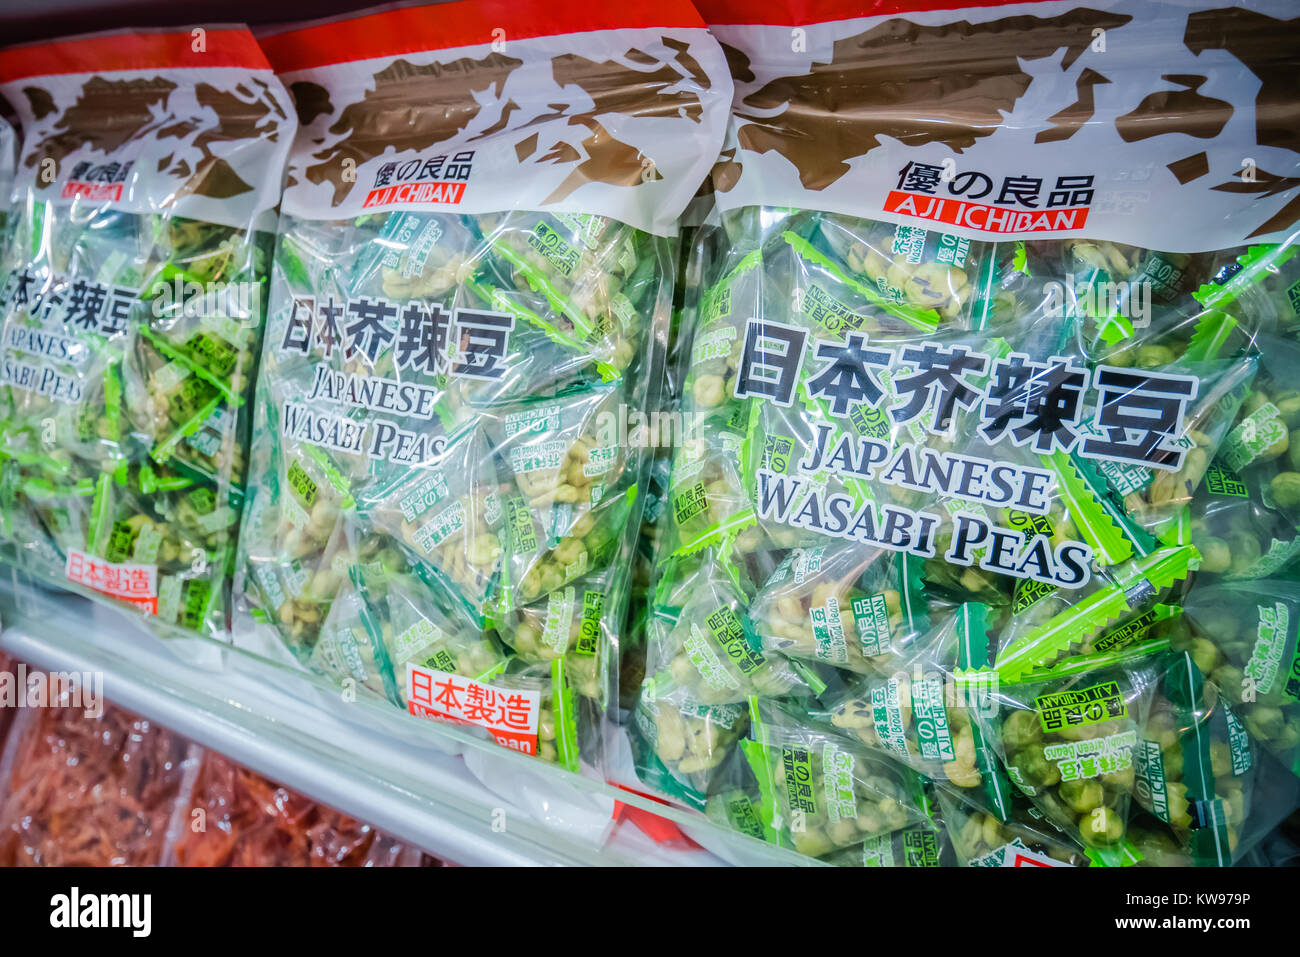 big bag japanese wasabi peas Stock Photo